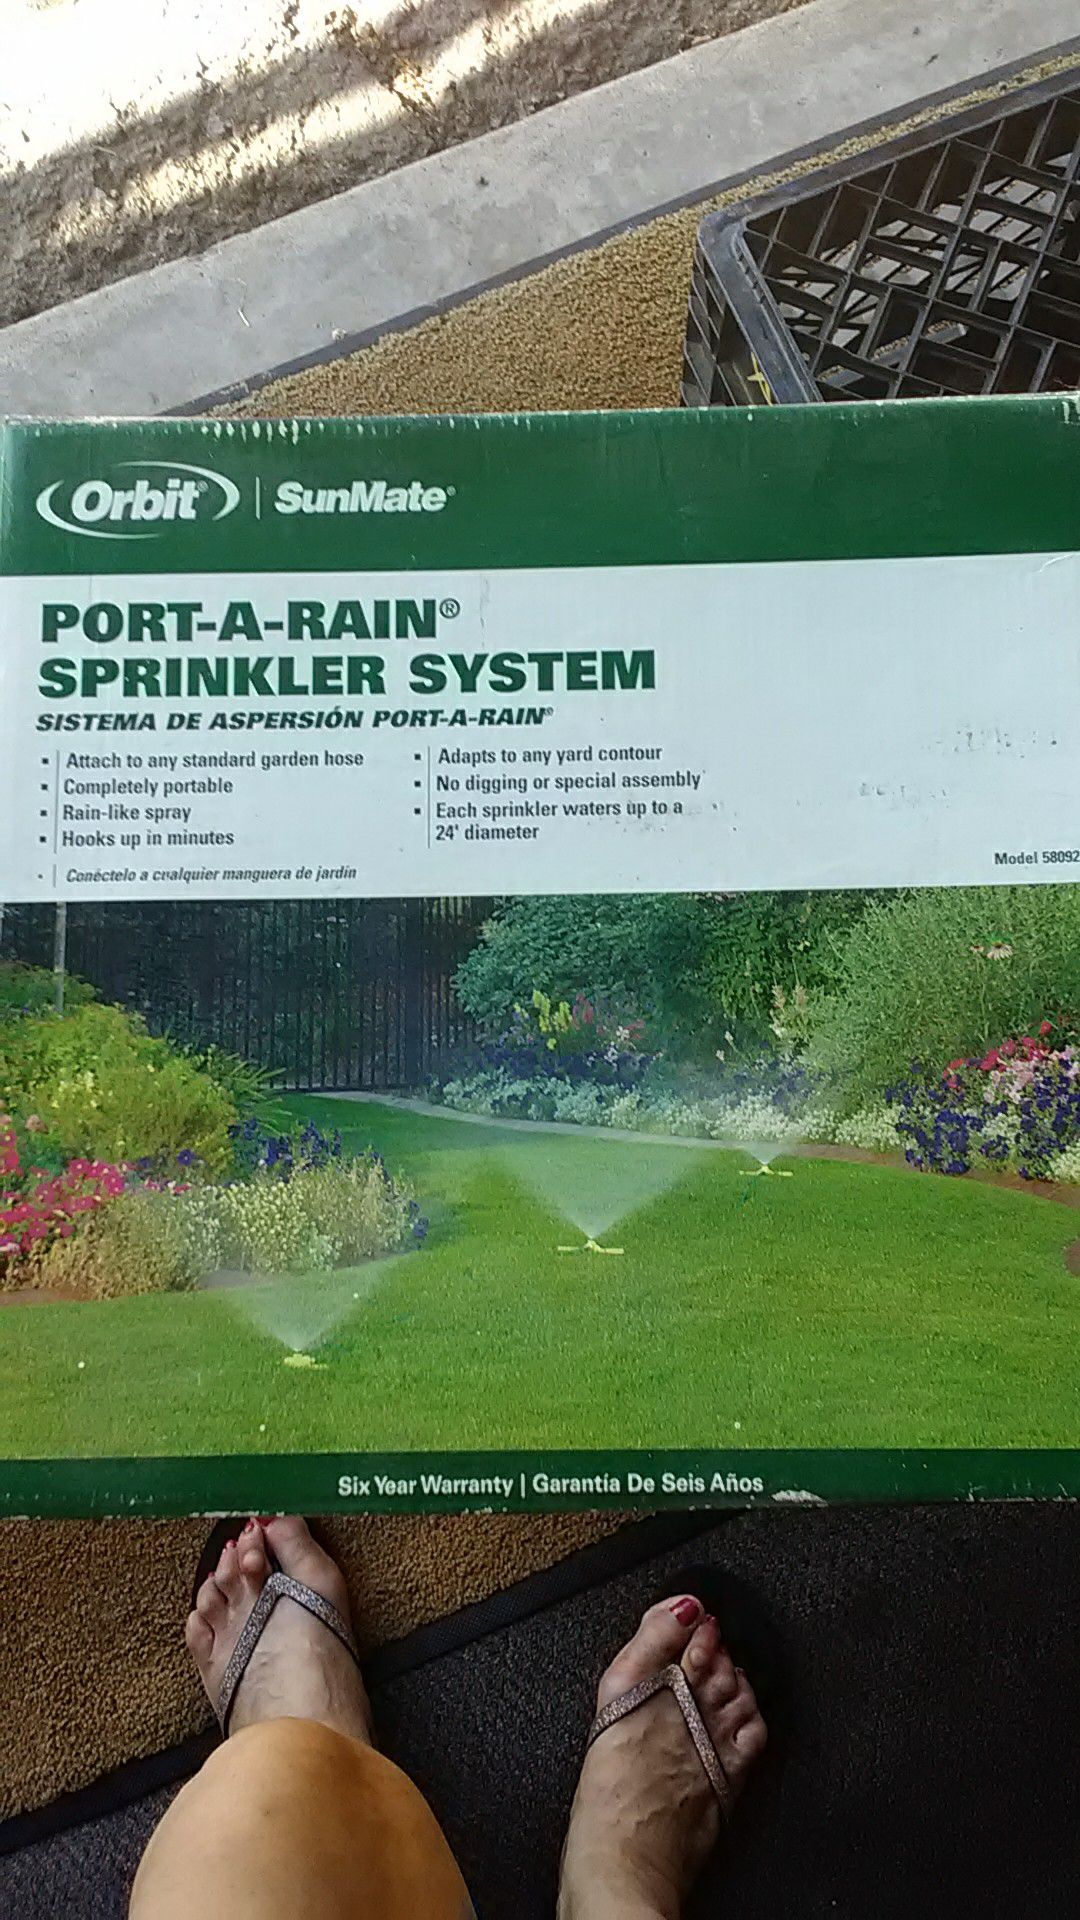 Port-A-Rain sprinkler system